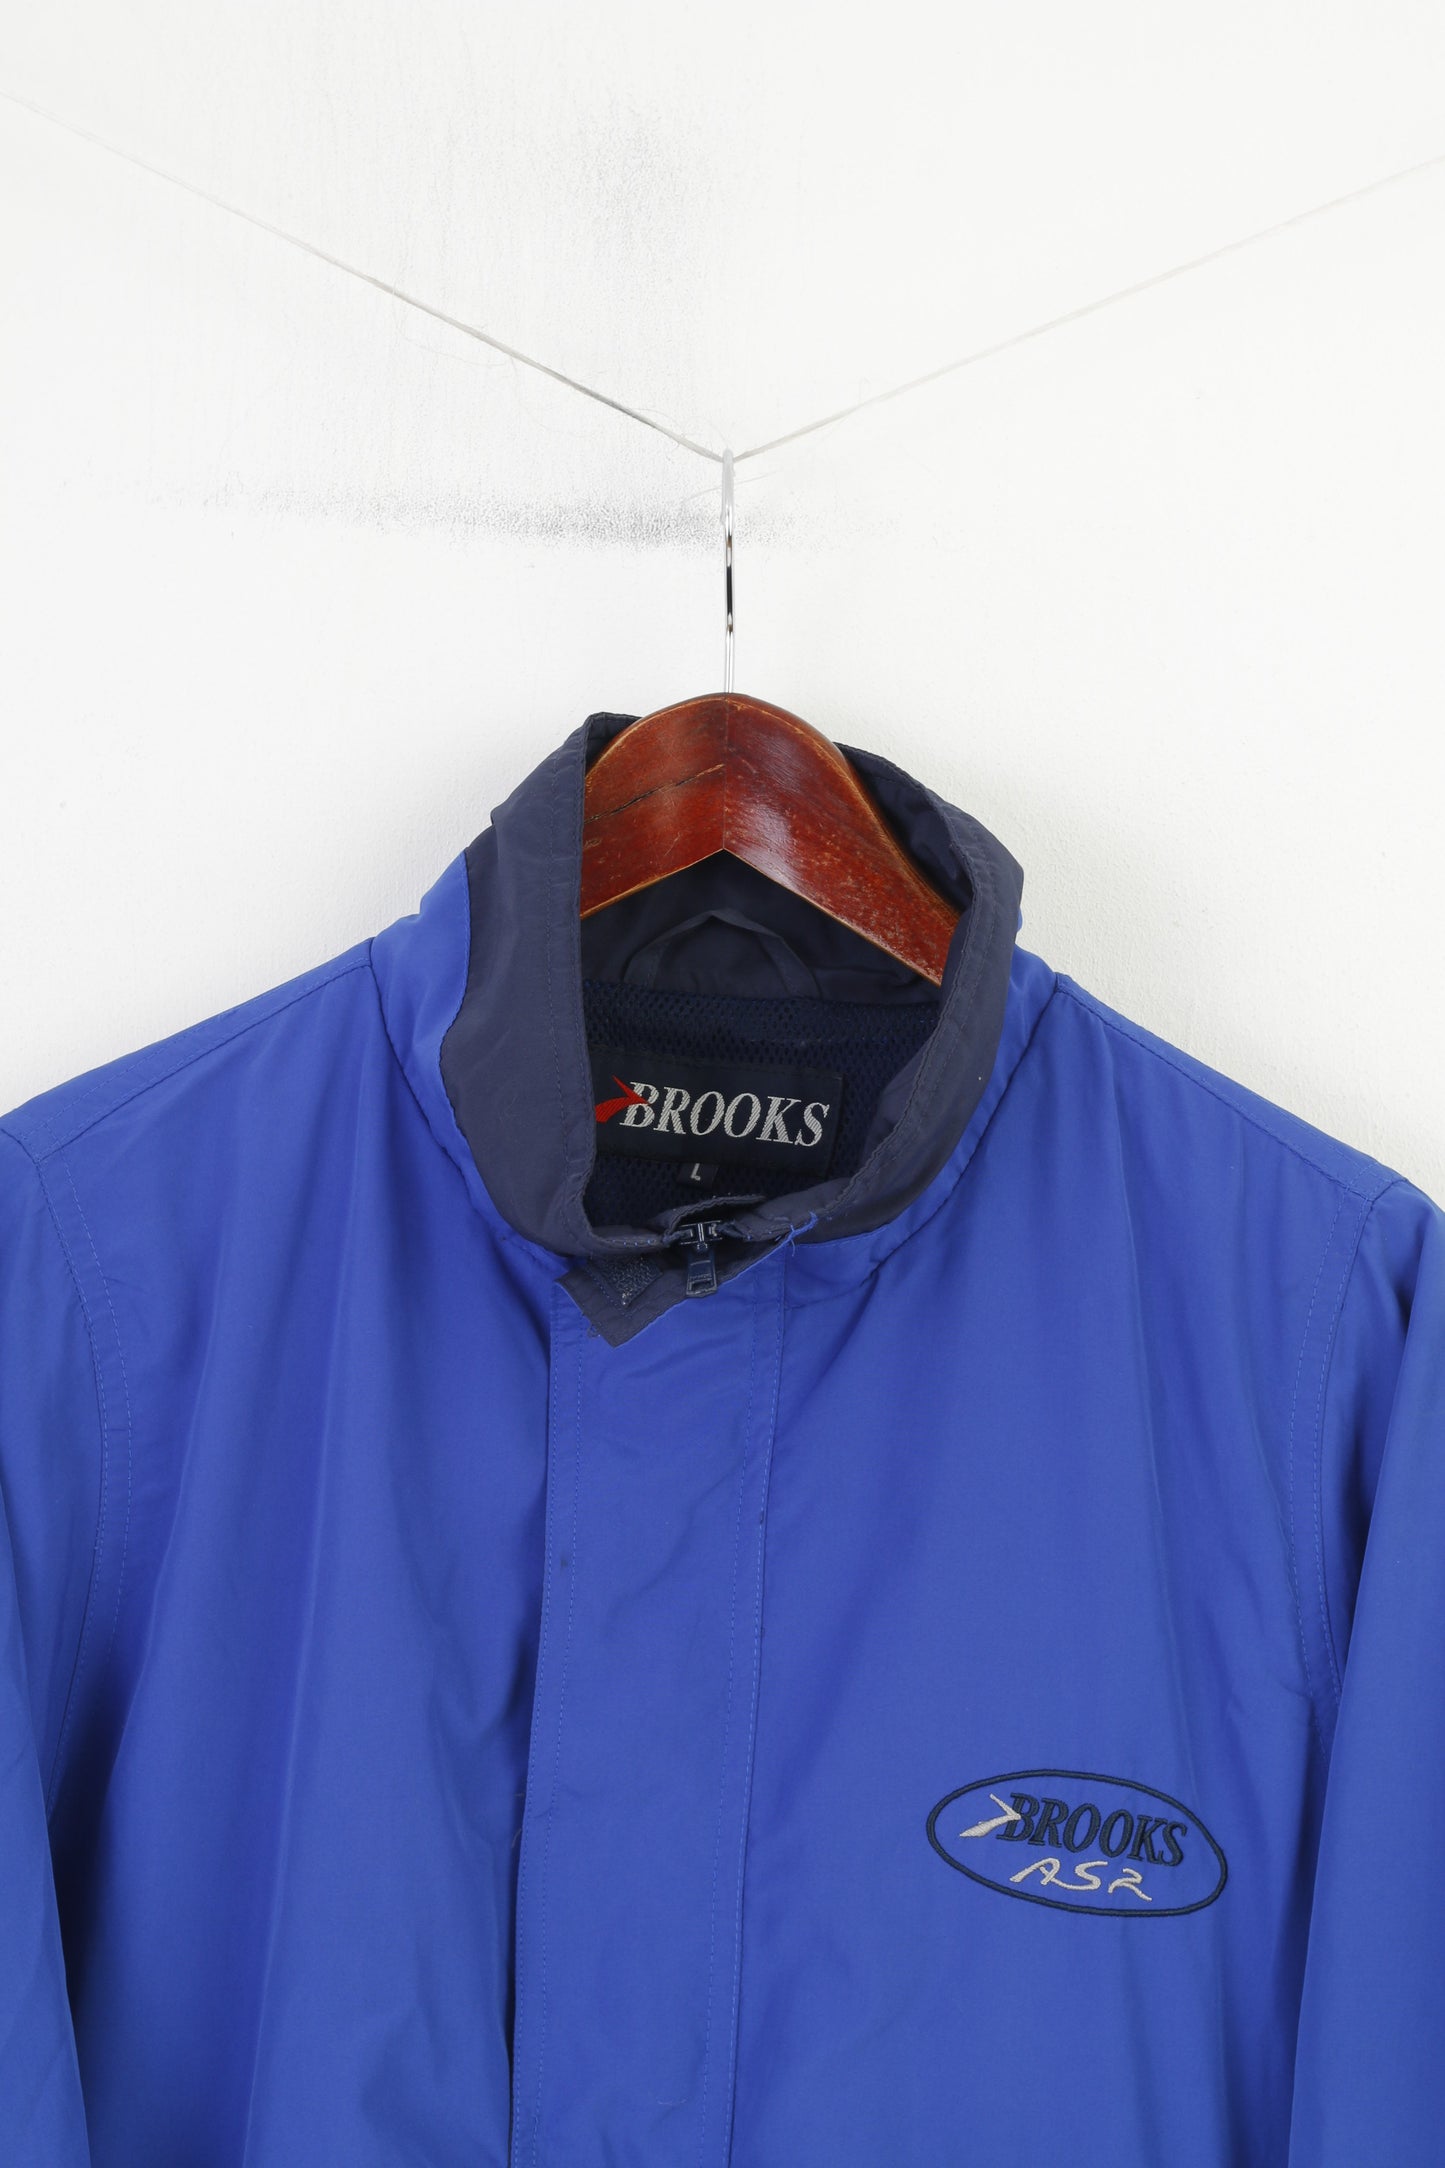 Brooks Men L Jacket Blue Navy Sport Lightweight Full Zipper Vintage Top